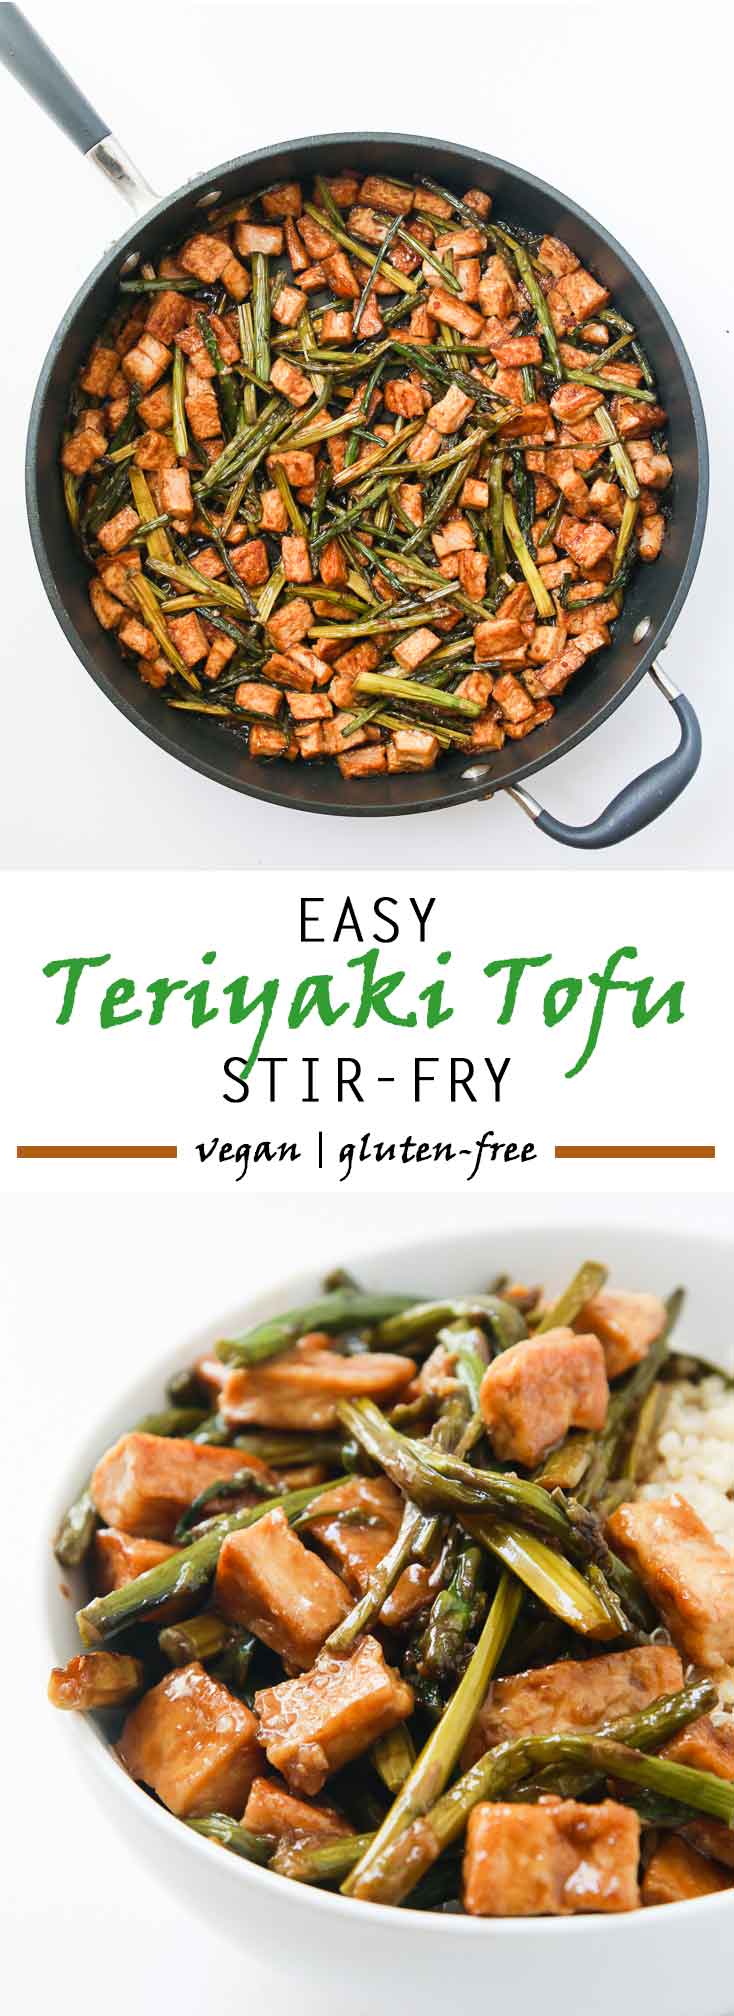 Teriyaki Tofu Stir Fry #vegan #glutenfree | Vegetarian Gastronomy | www.vegetariangastronomy.com